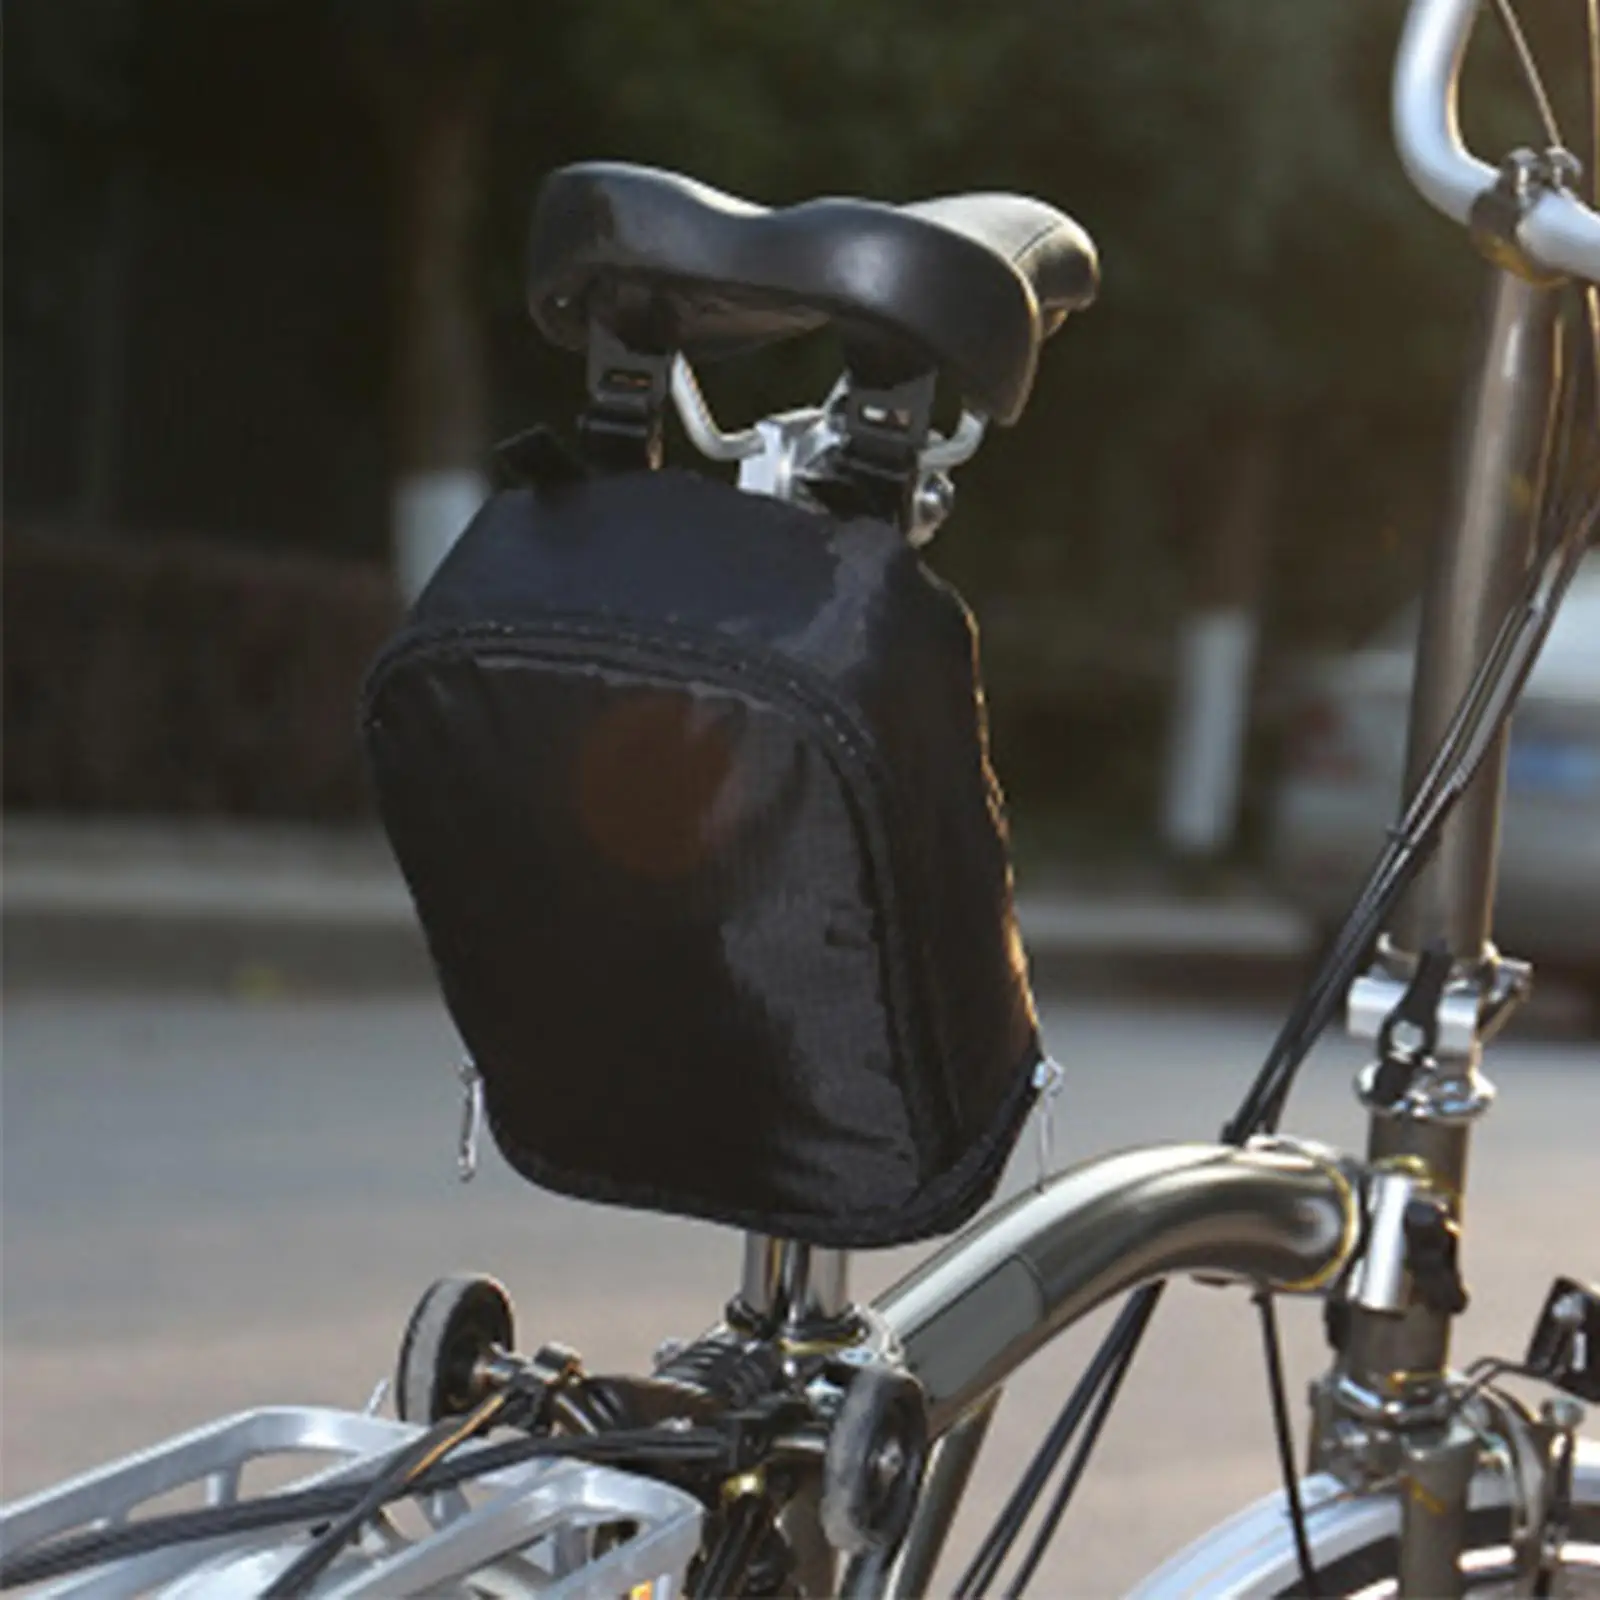 Bicycle Bag Folding Bike Storage Bag Bicycle Protection Cover Bike Luggage Bag Travel Bag Cycling Bicycle Accessories